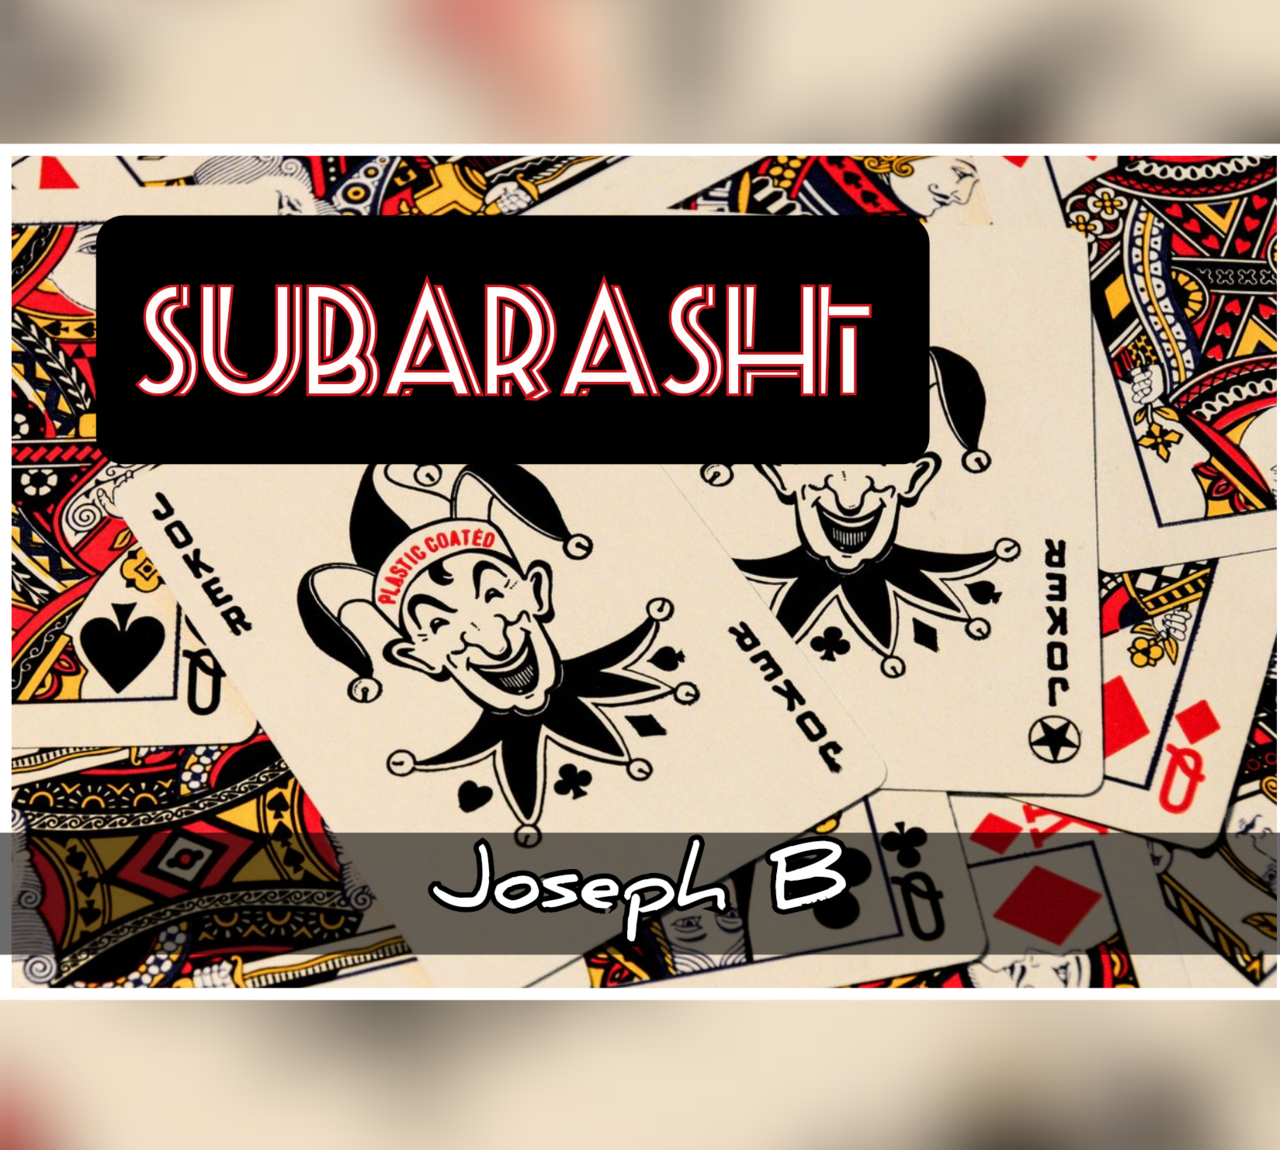 Joseph B. - SUBARASH